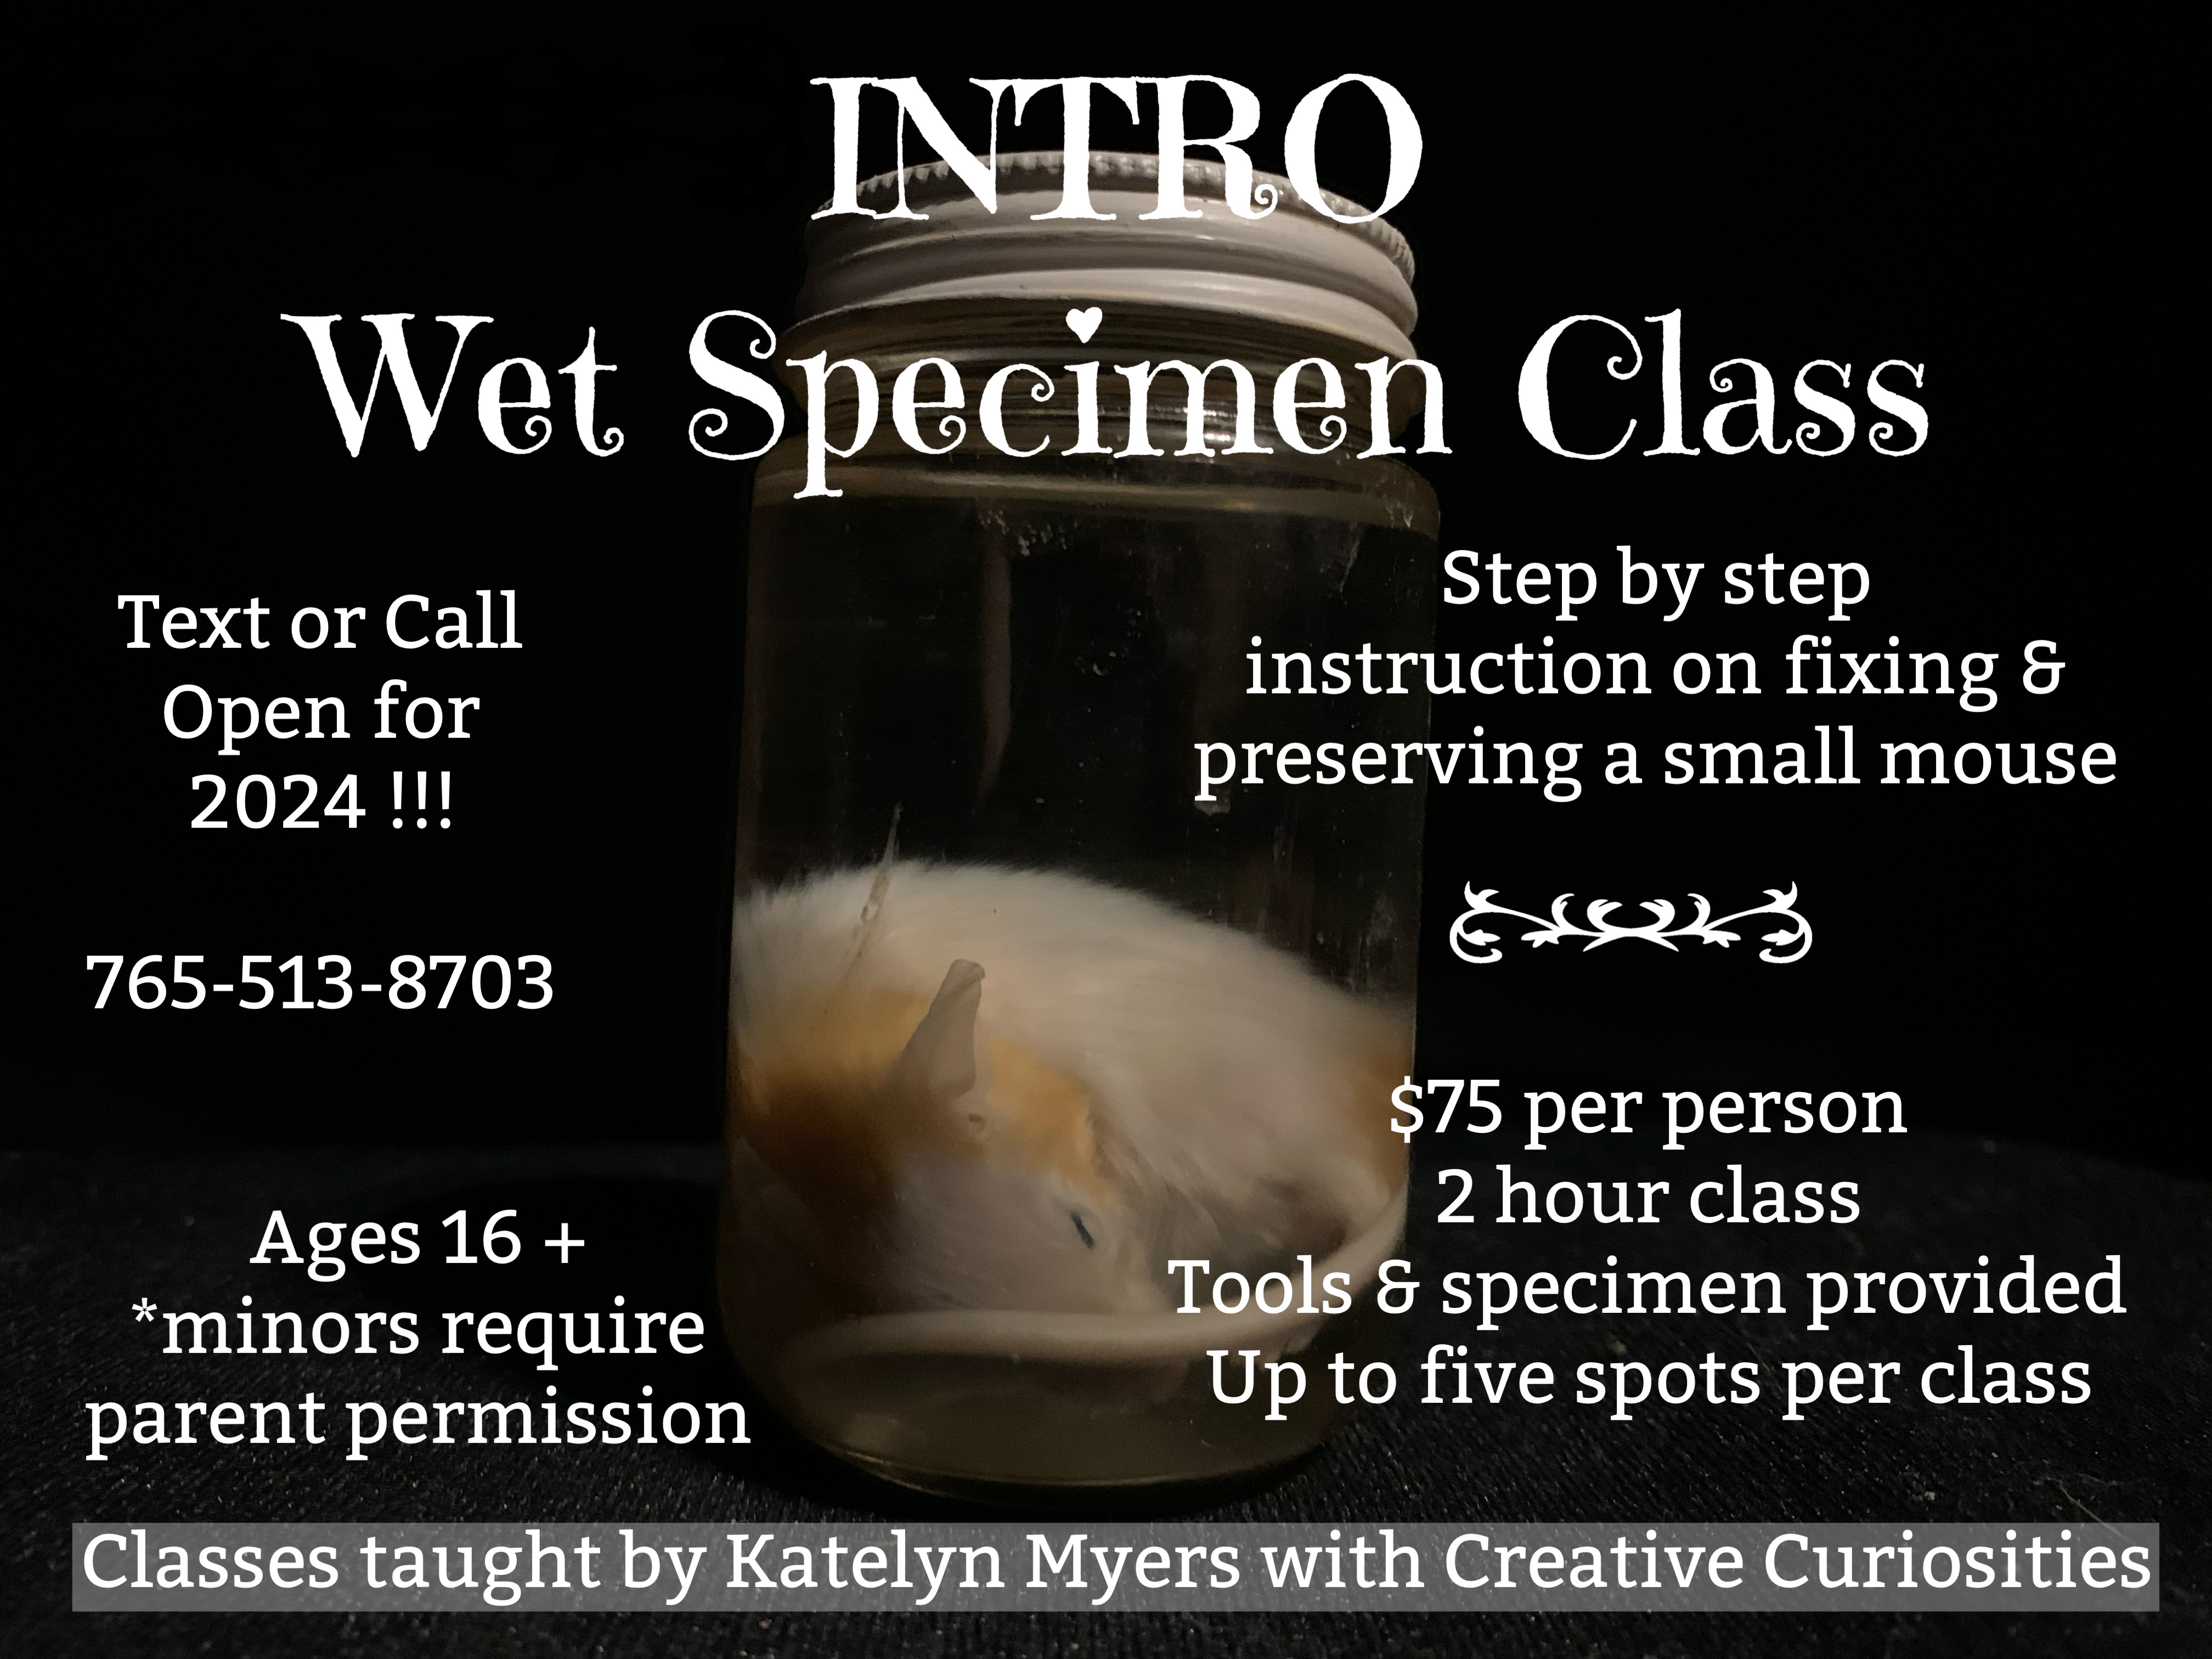 INTRO Wet Specimen Class